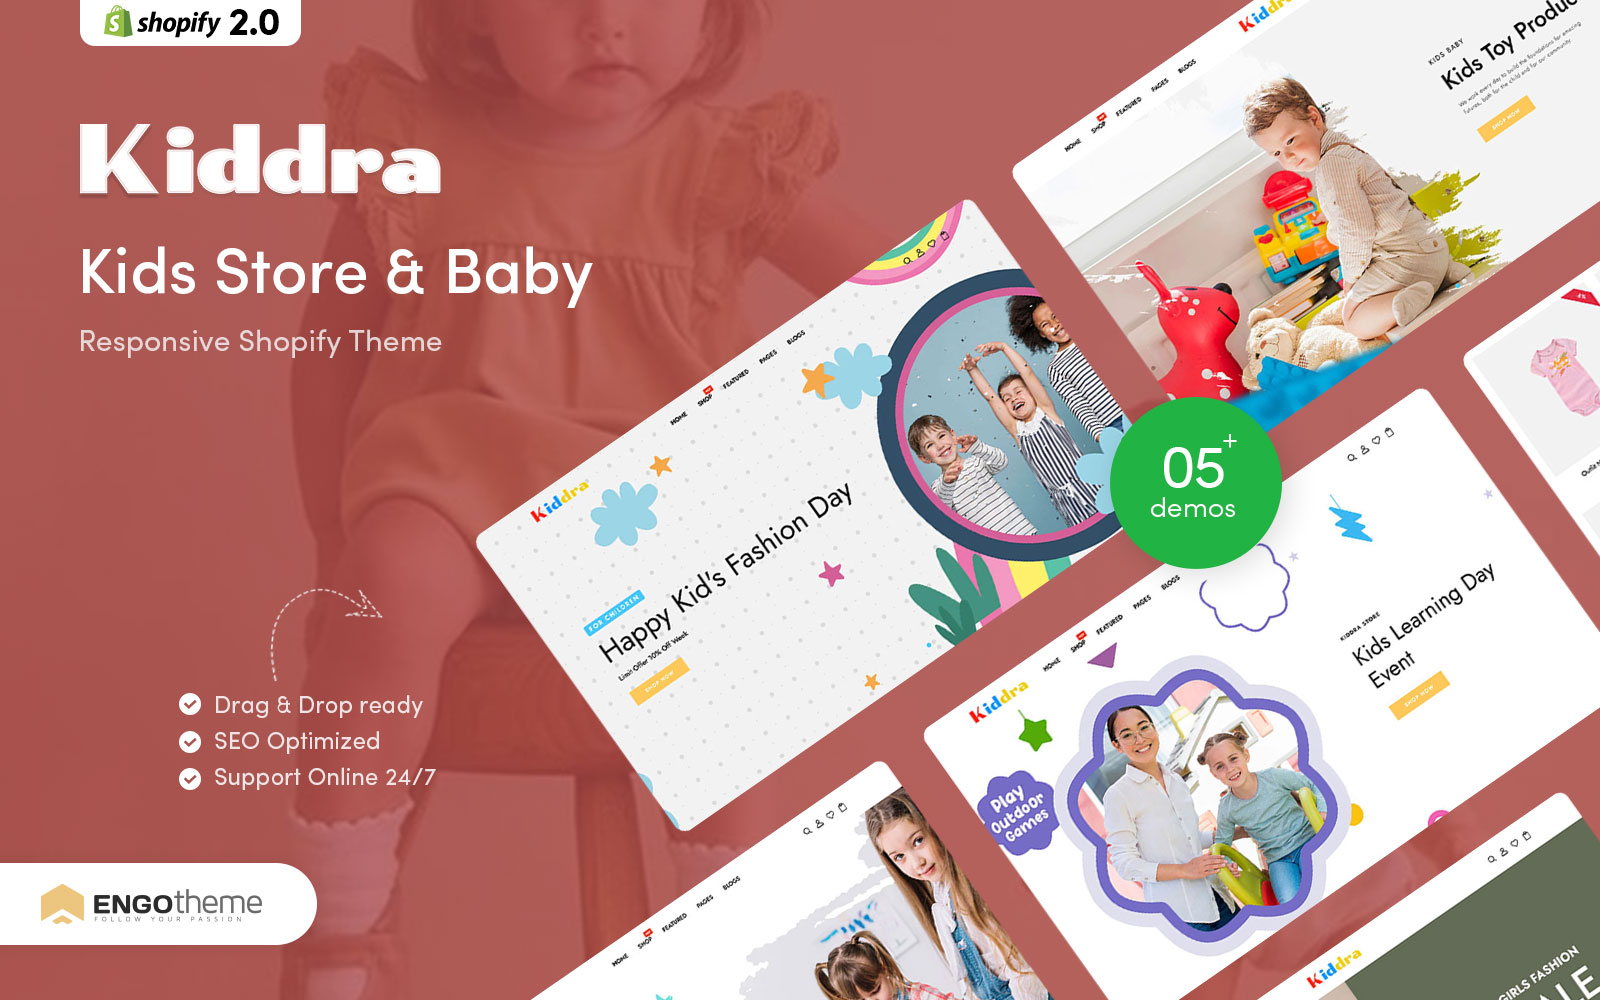 Kiddra - Kids Store & Baby Shop Responsive Shopify Theme